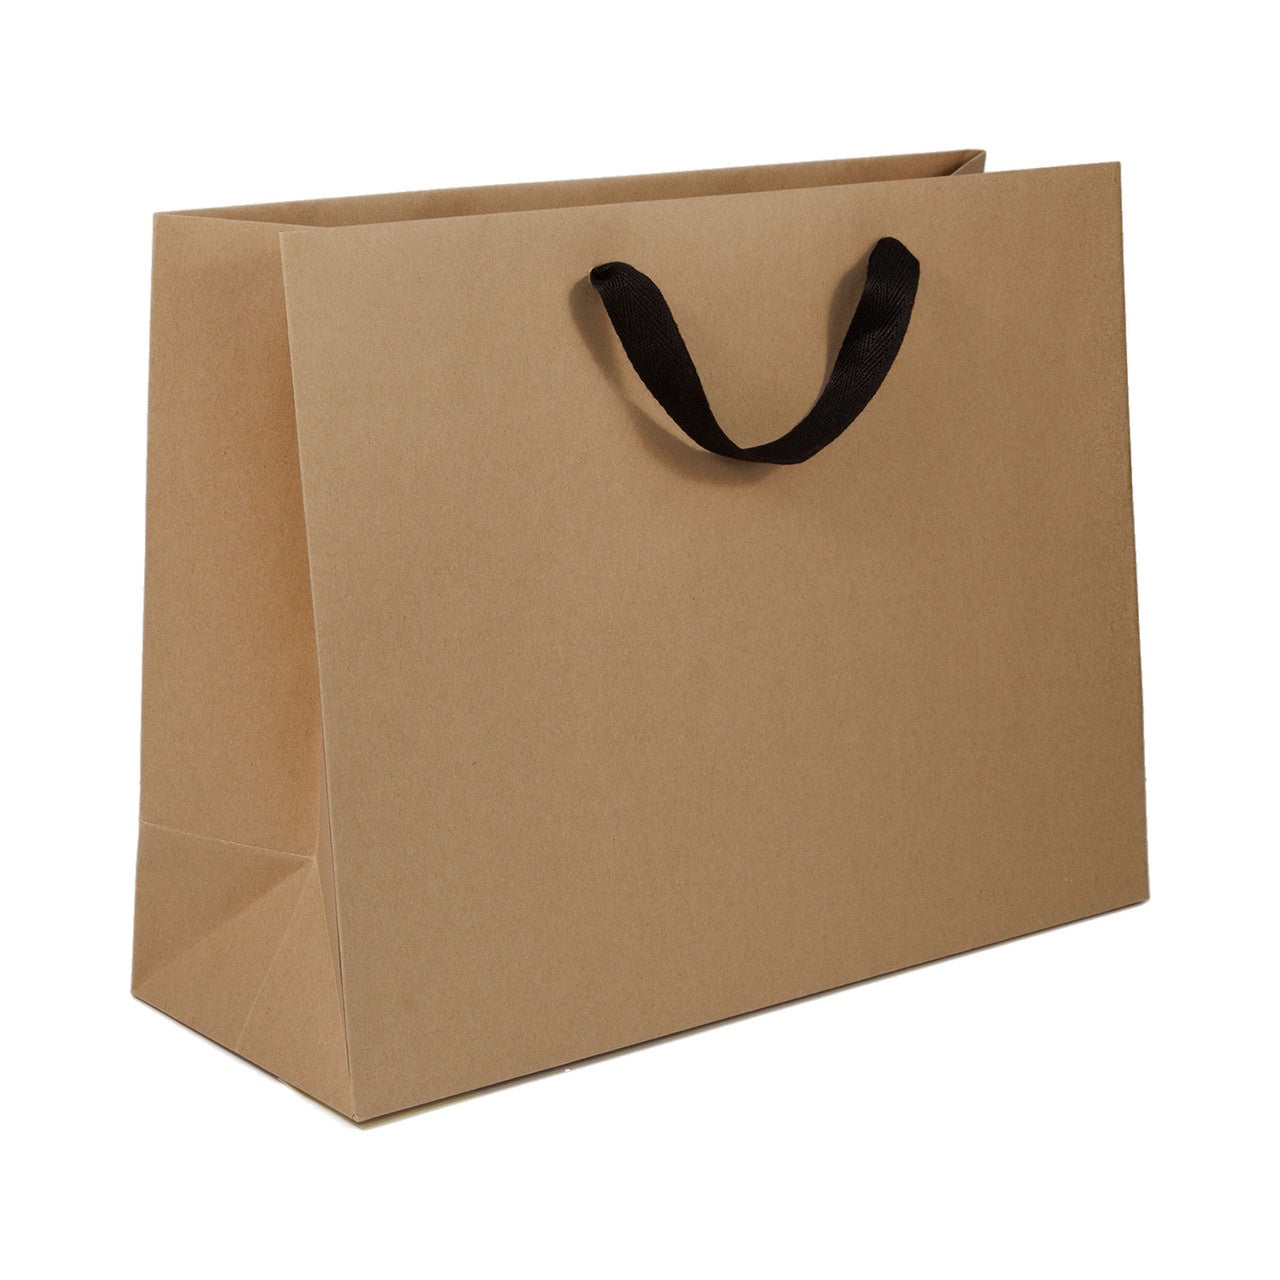 16x6x12 Kraft Gift Bag, Black Handles with Black Tissue Paper